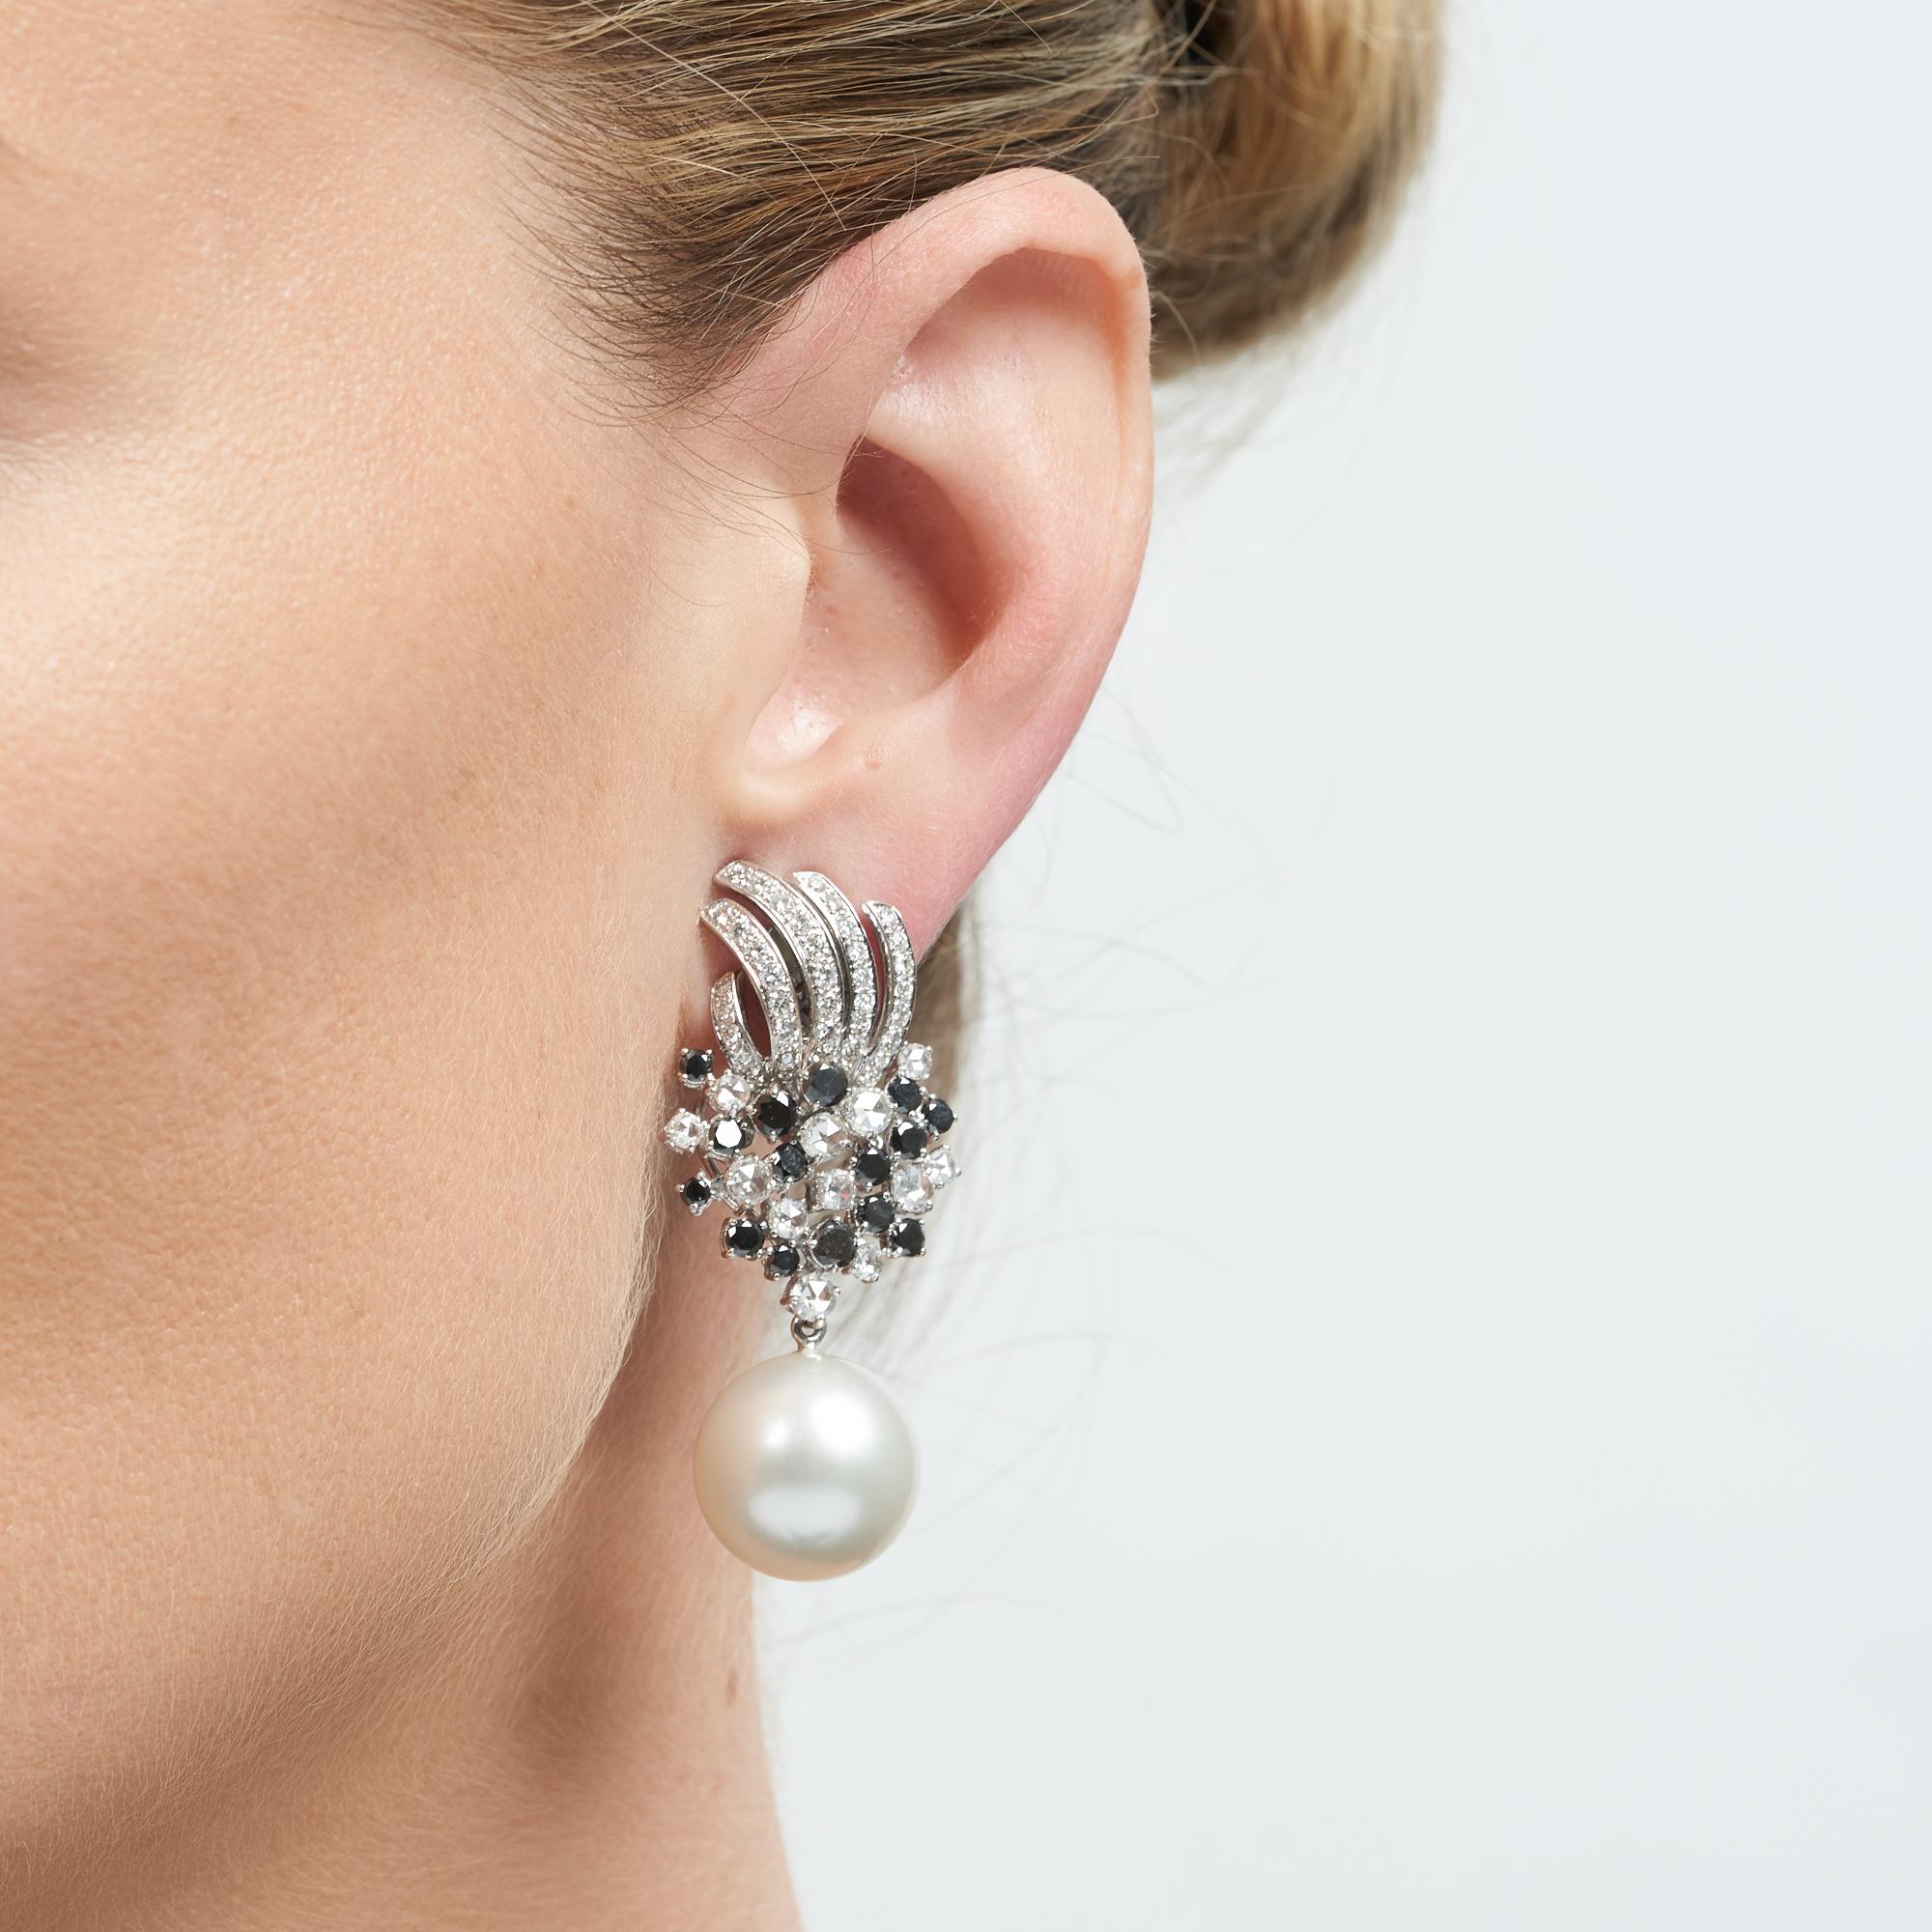 Margot McKinney 18 Karat Gold Earrings with White/Black Diamonds, Pearl Drops 1